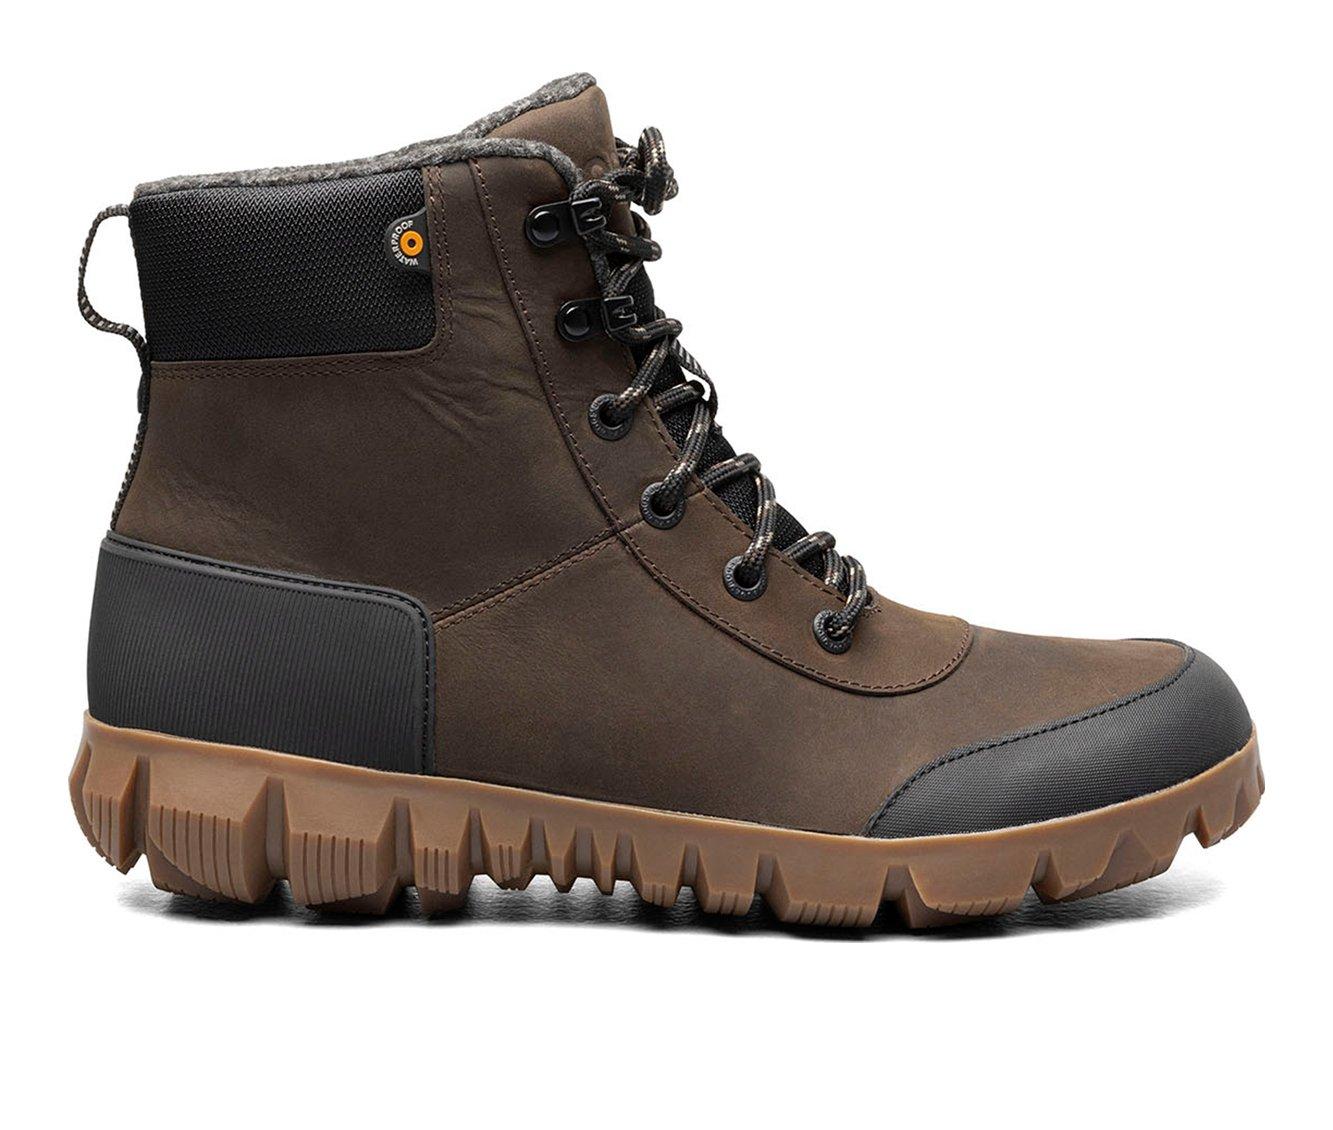 Men's Bogs Footwear Arcata Urban Leather Mid Winter Boots